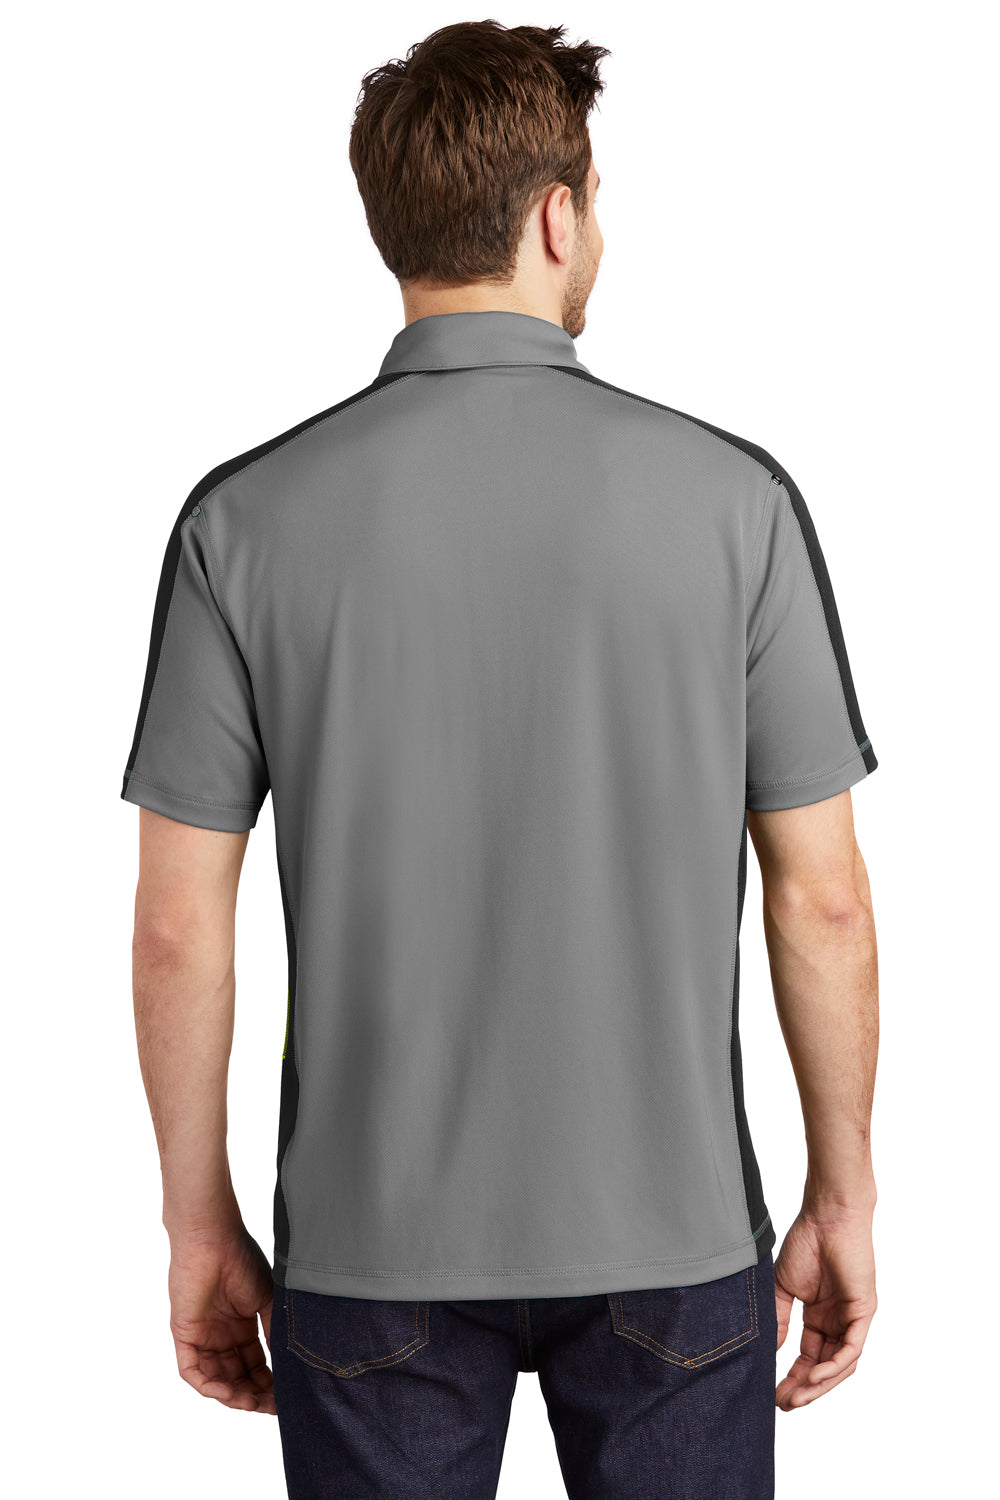 Ogio OG106 Mens Trax Moisture Wicking Short Sleeve Polo Shirt Petrol Grey/Black Back